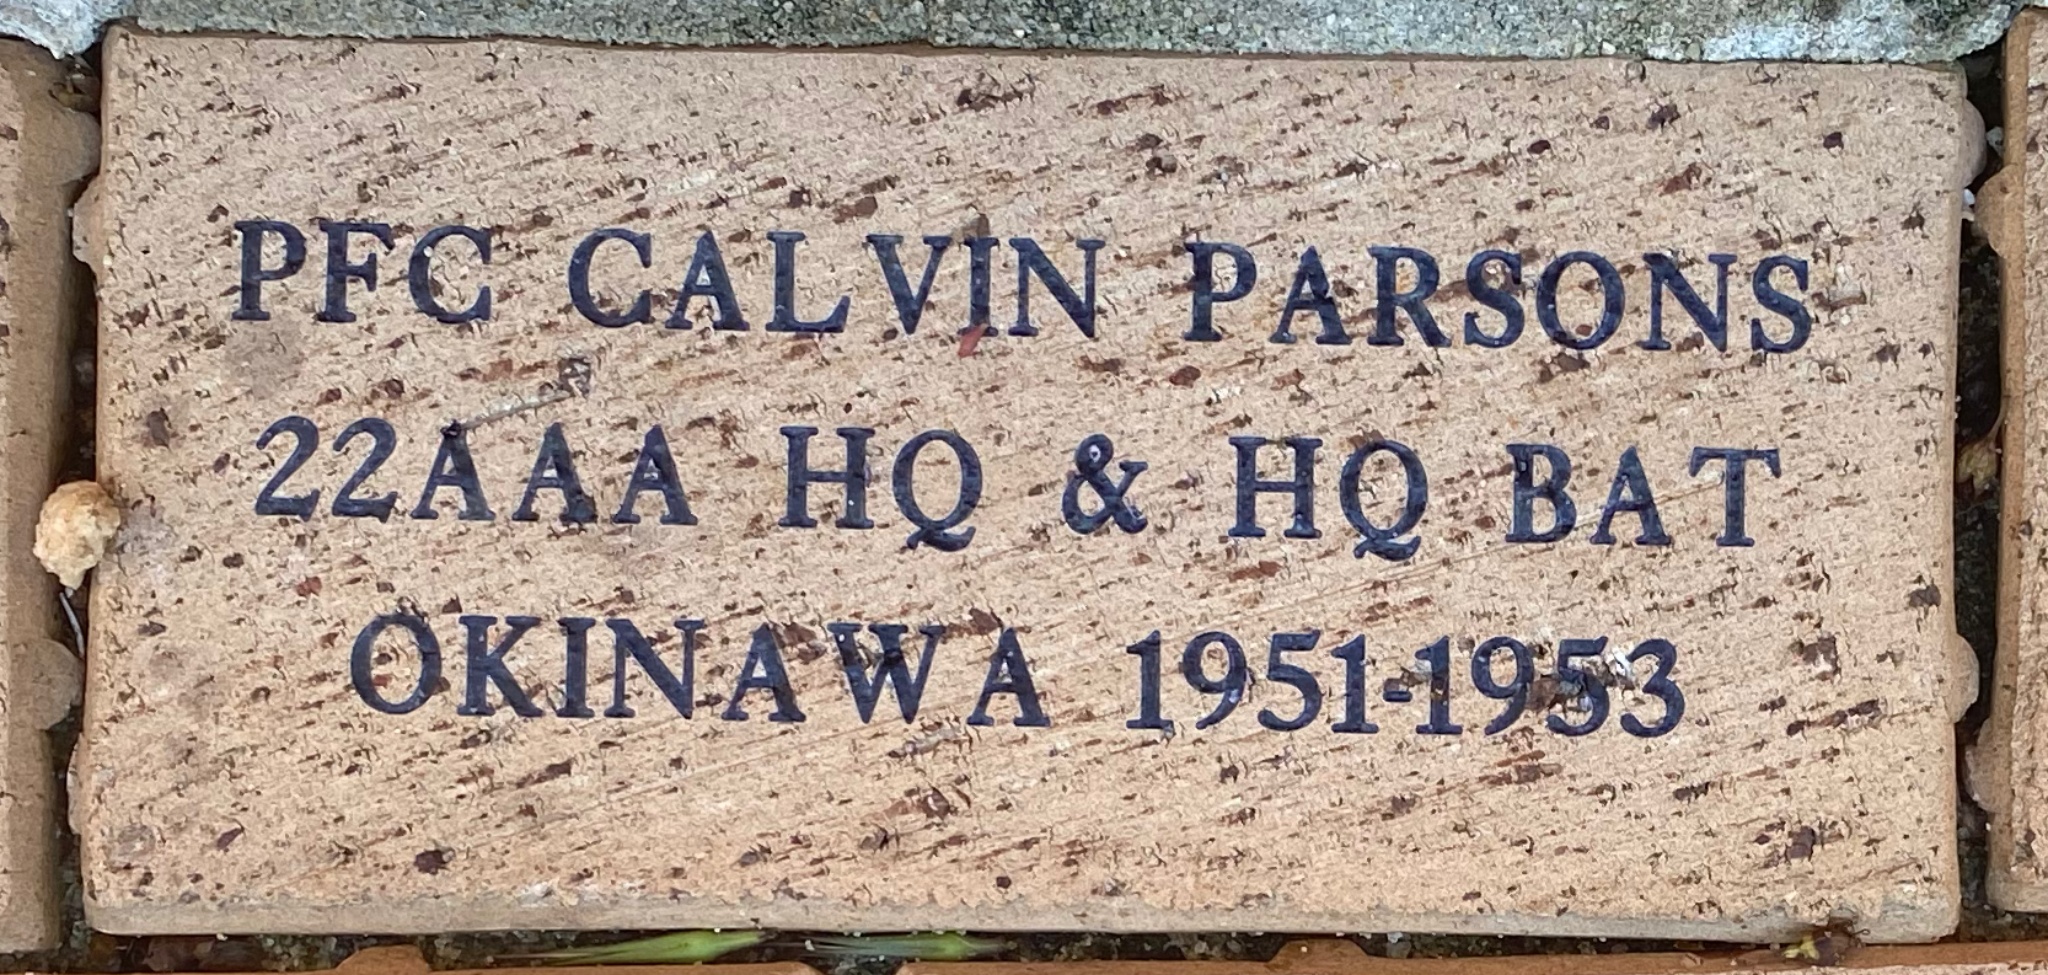 PFC CALVIN PARSONS 22AAA HQ & HQ BAT OKINAWA 1951-1953